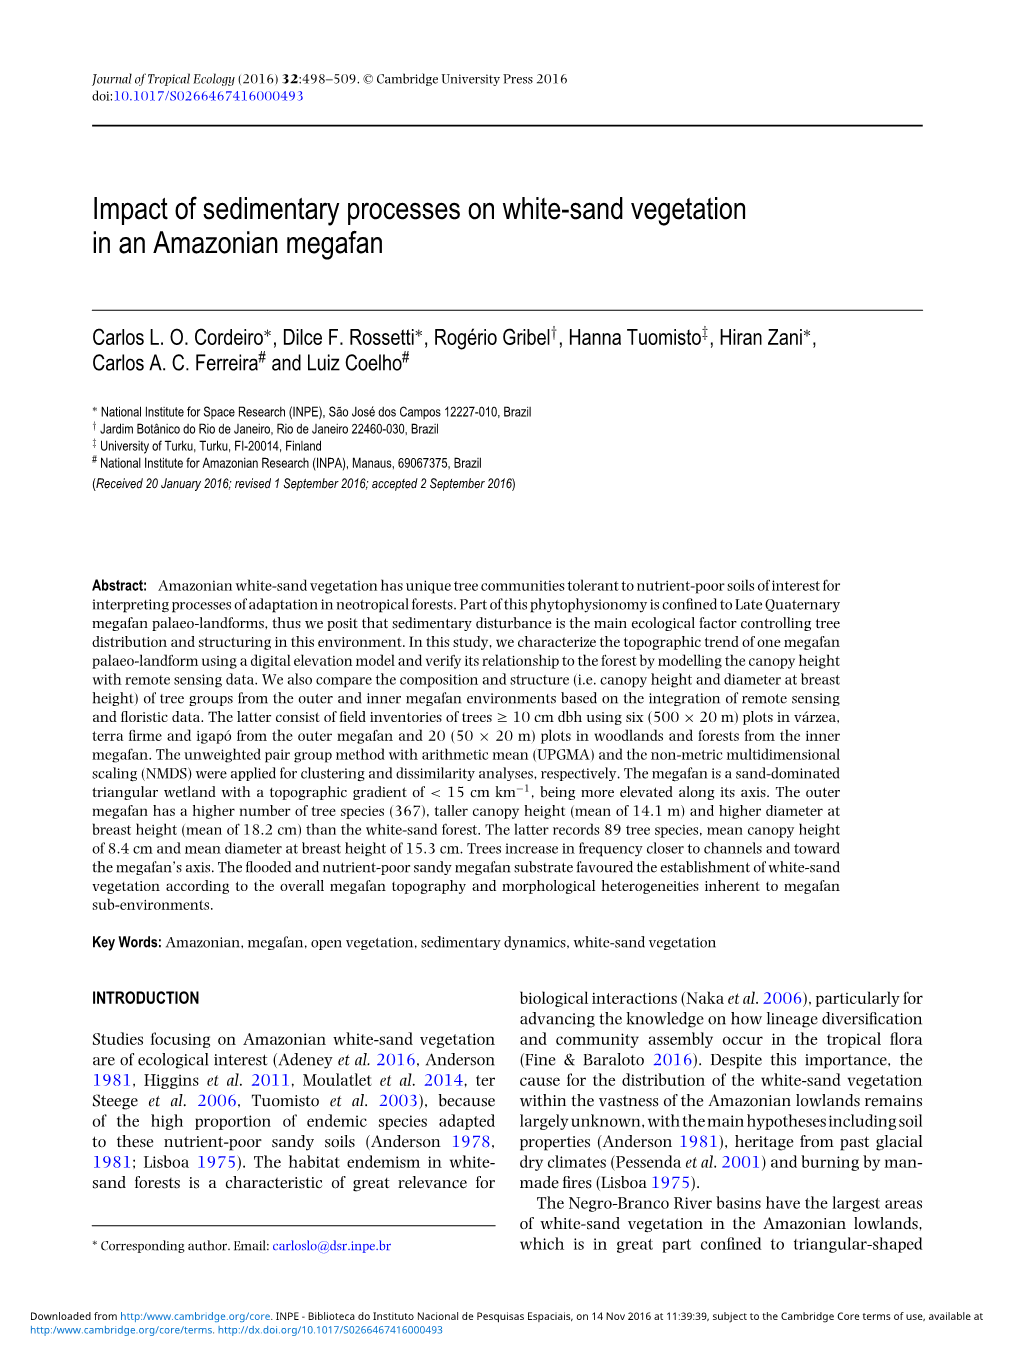 Impact of Sedimentary Processes on White-Sand Vegetation in an Amazonian Megafan